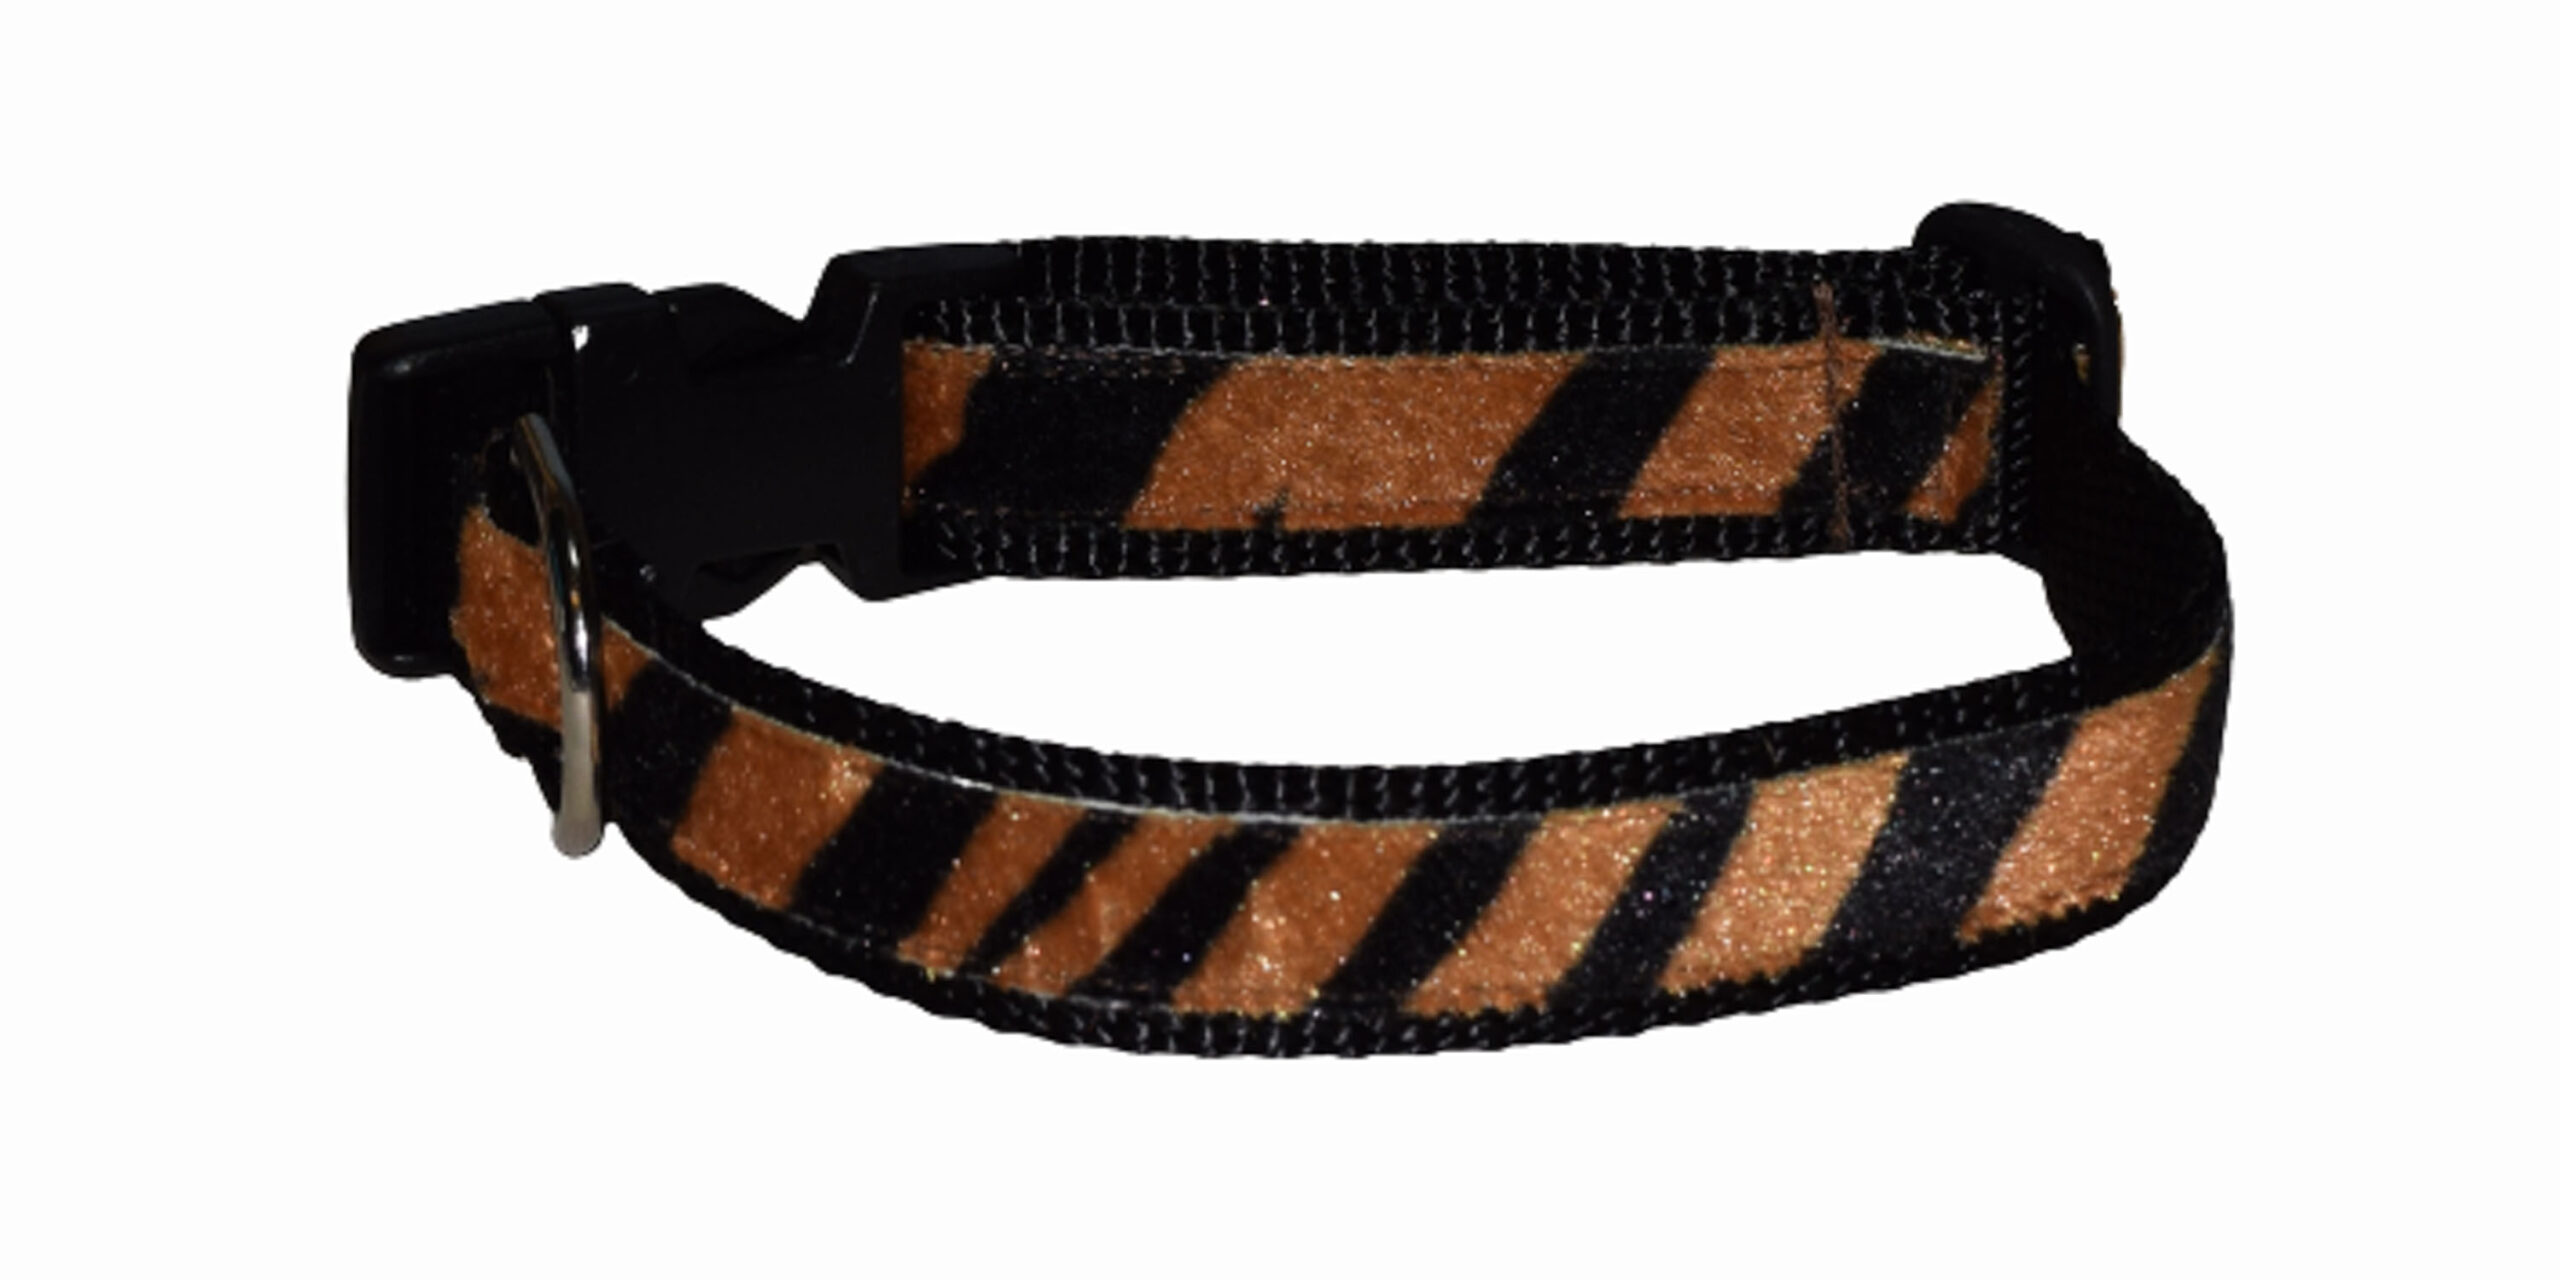 Tiger Fur Wholesale Dog and Cat Collars